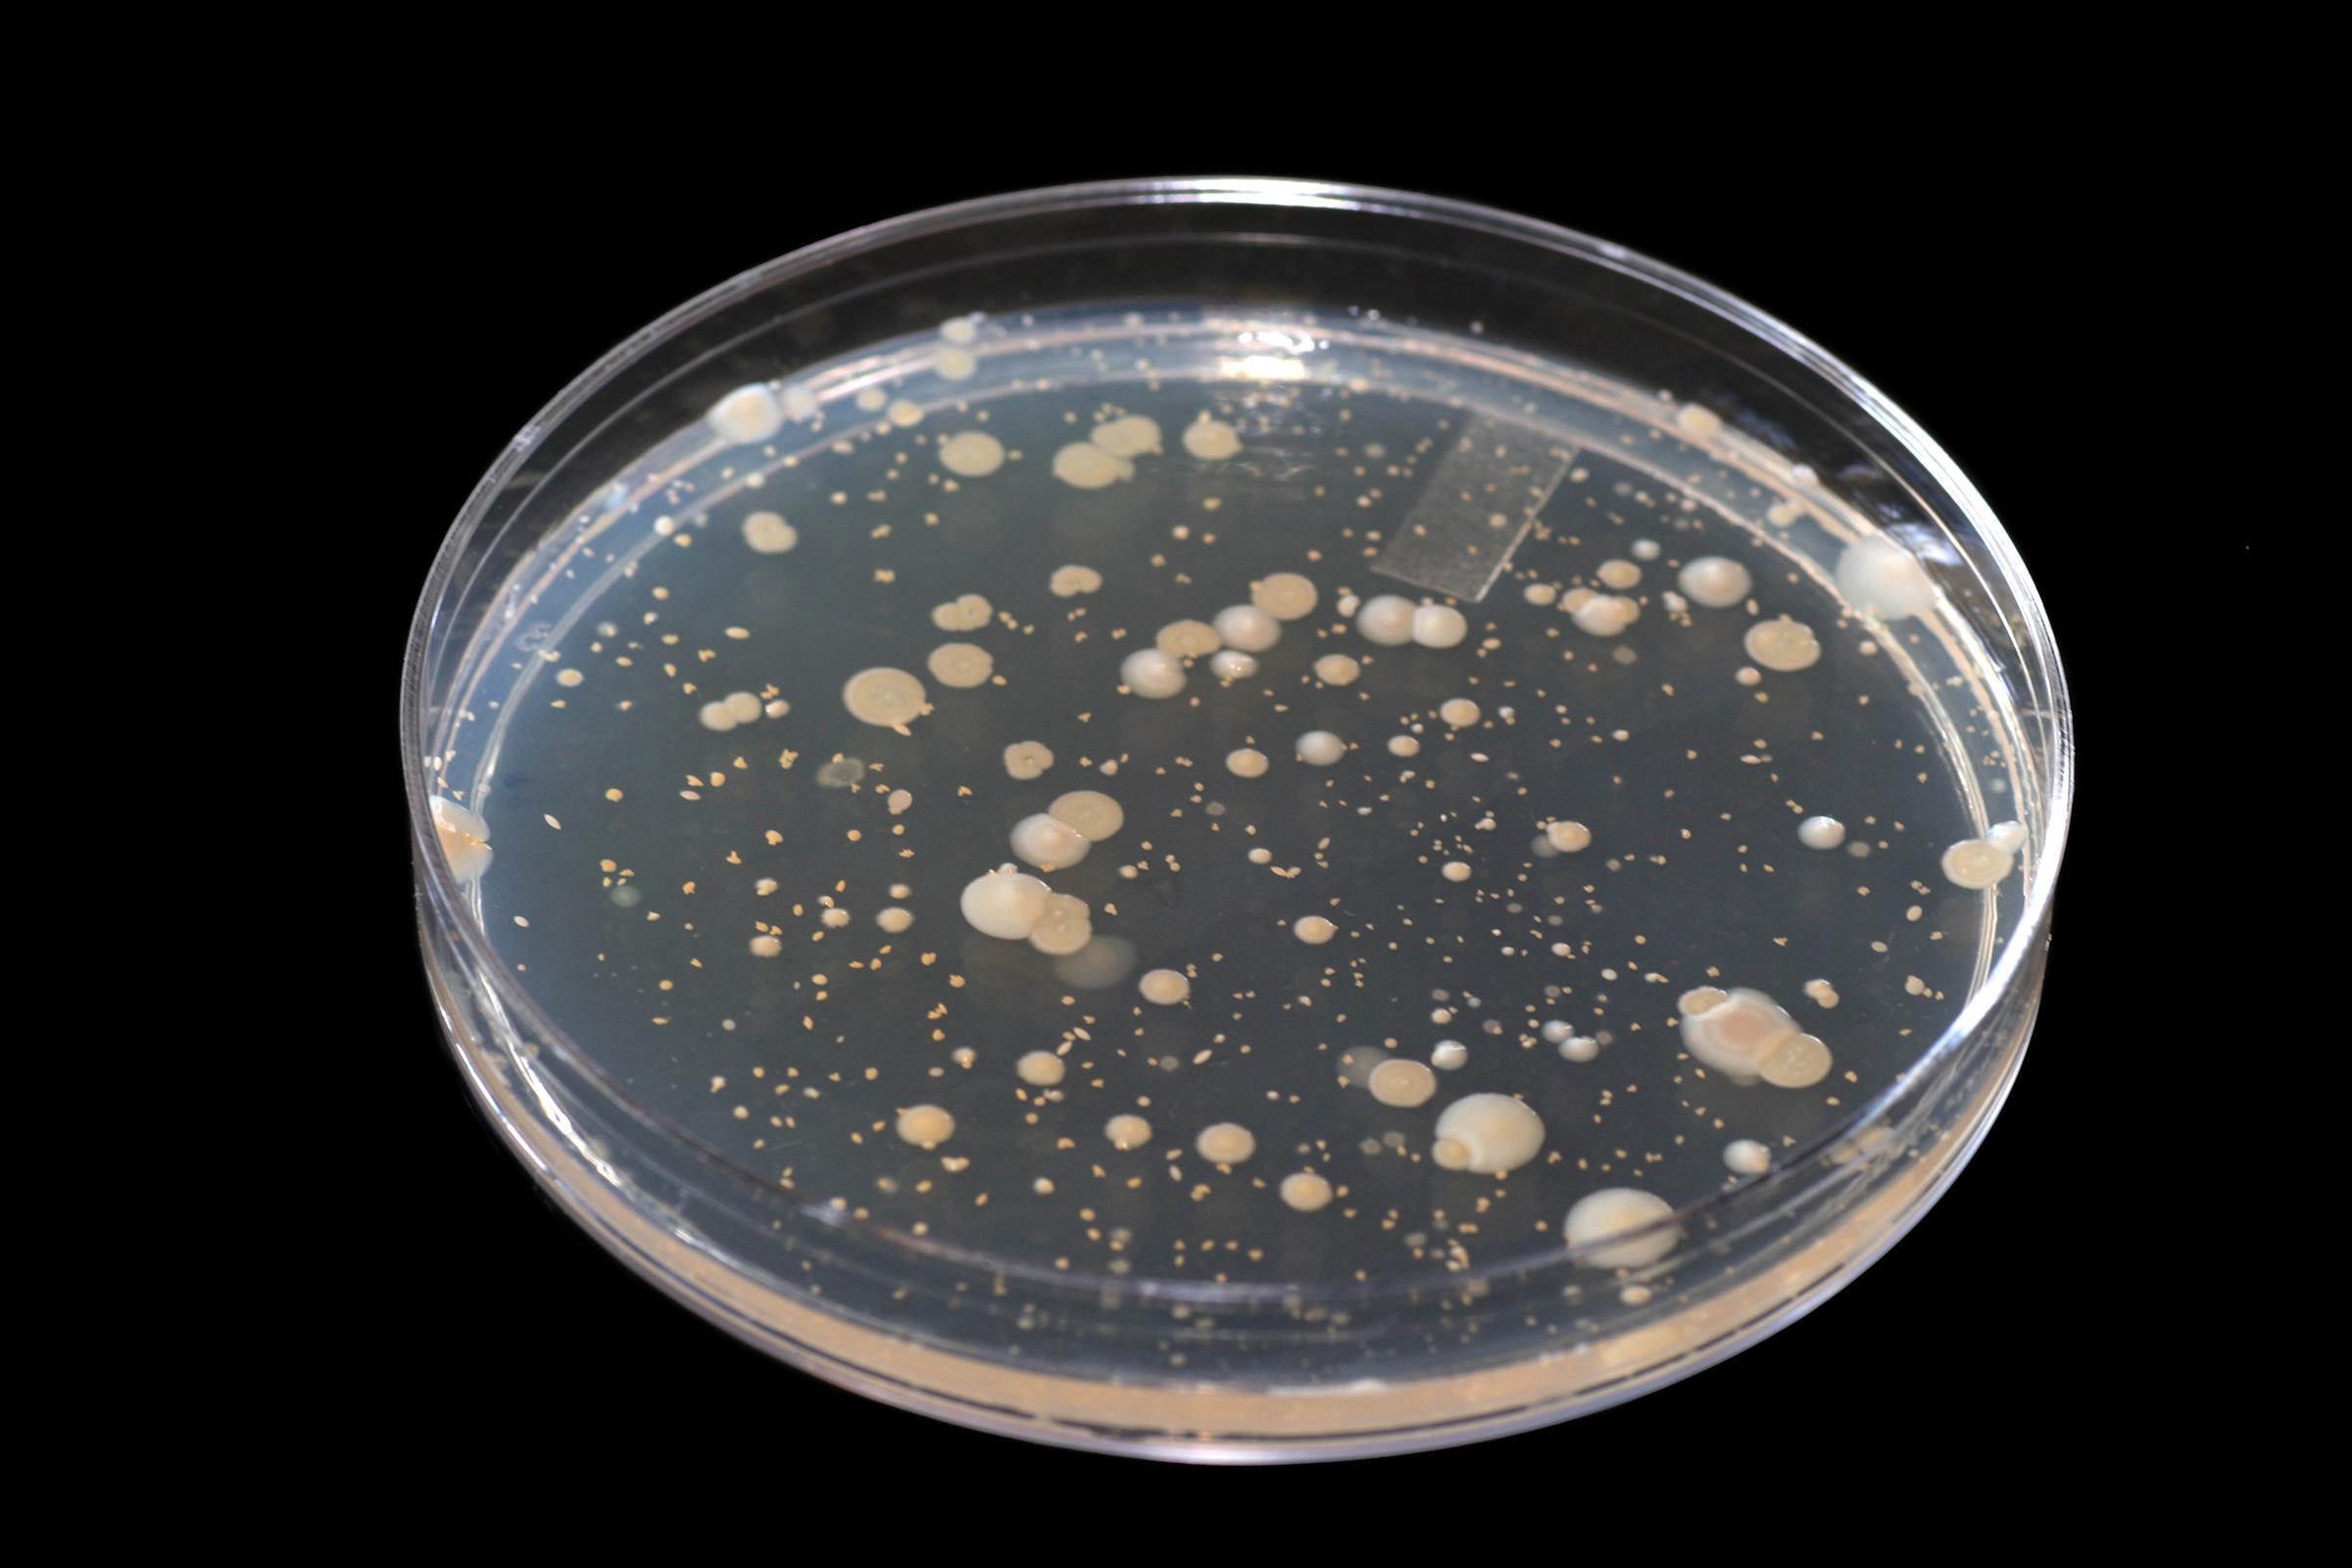 Microbiology photo